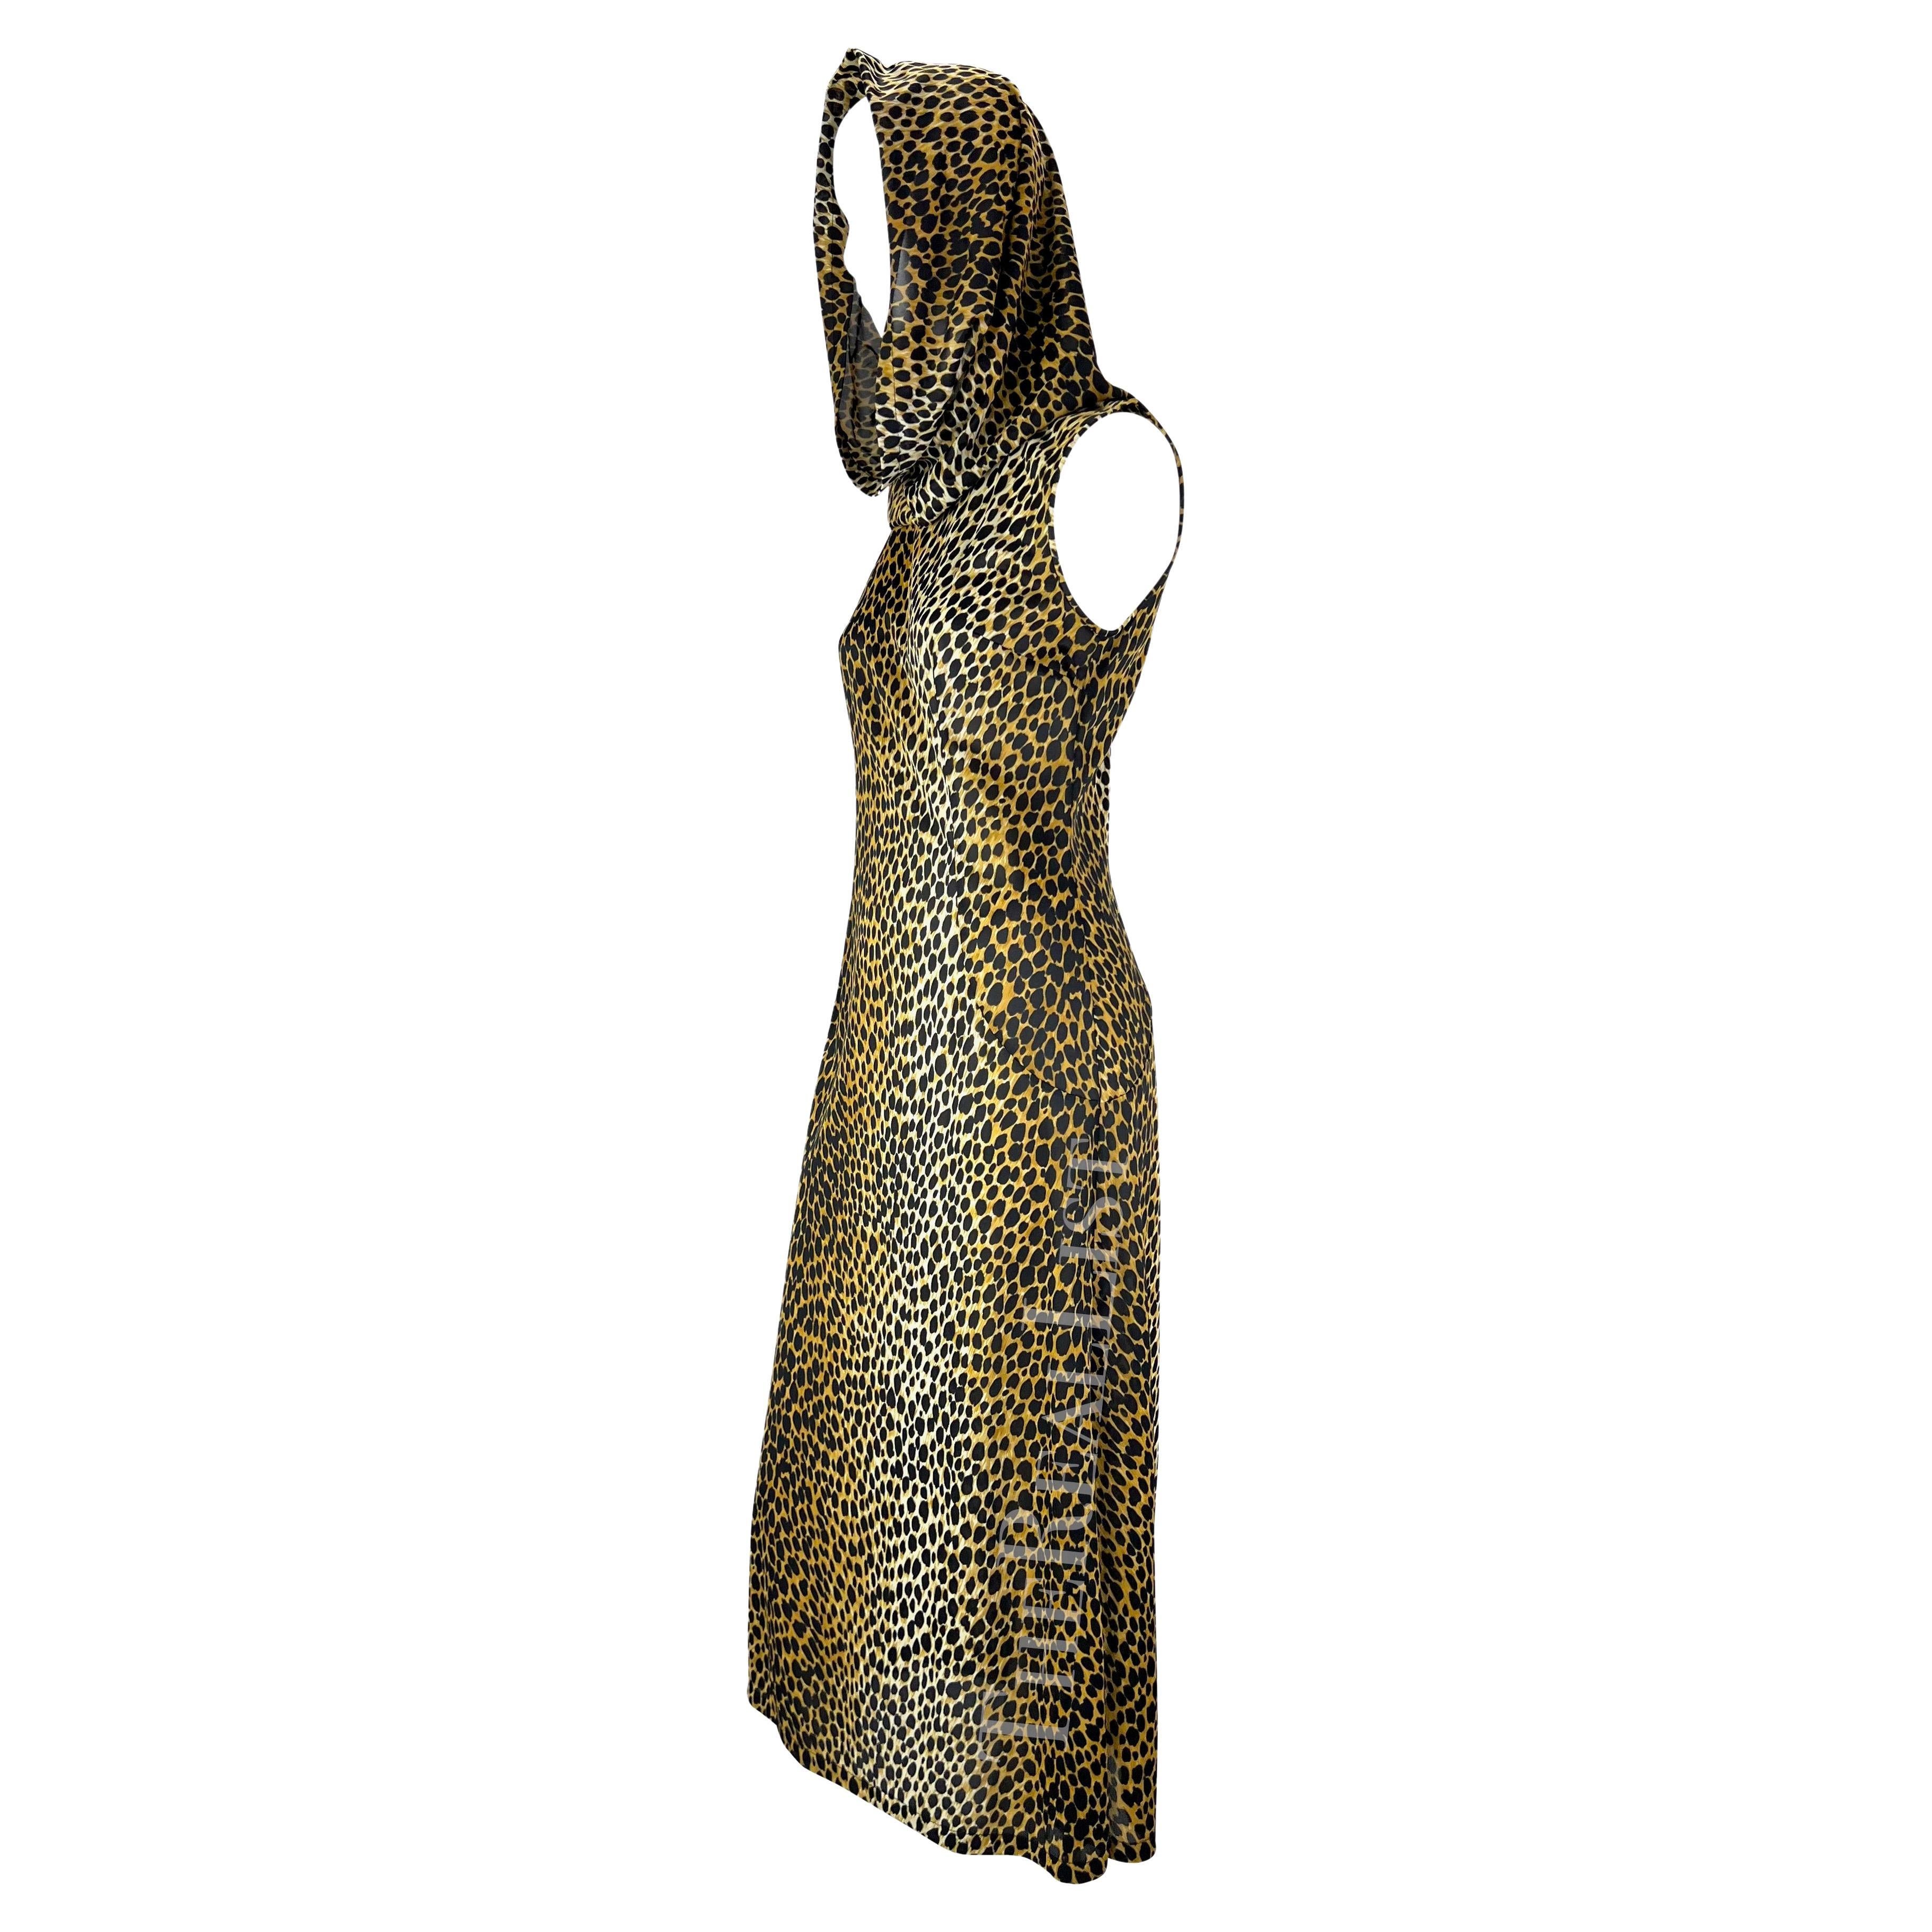 S/S 1996 Dolce & Gabbana Hooded Stretch Leopard Print Hit Slit Dress For Sale